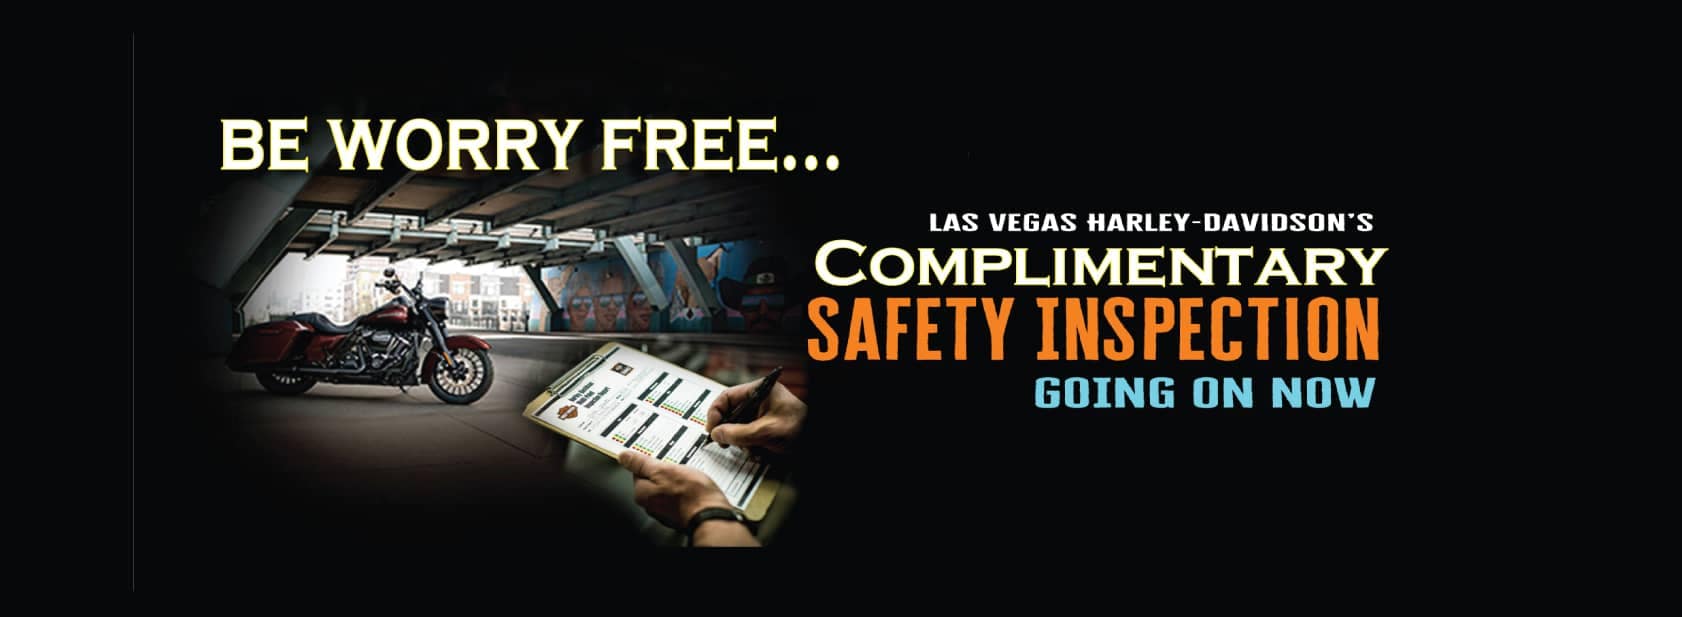 Las Vegas Harley-Davidson Treats Customers Like Family With a Free Harley Service Inspection